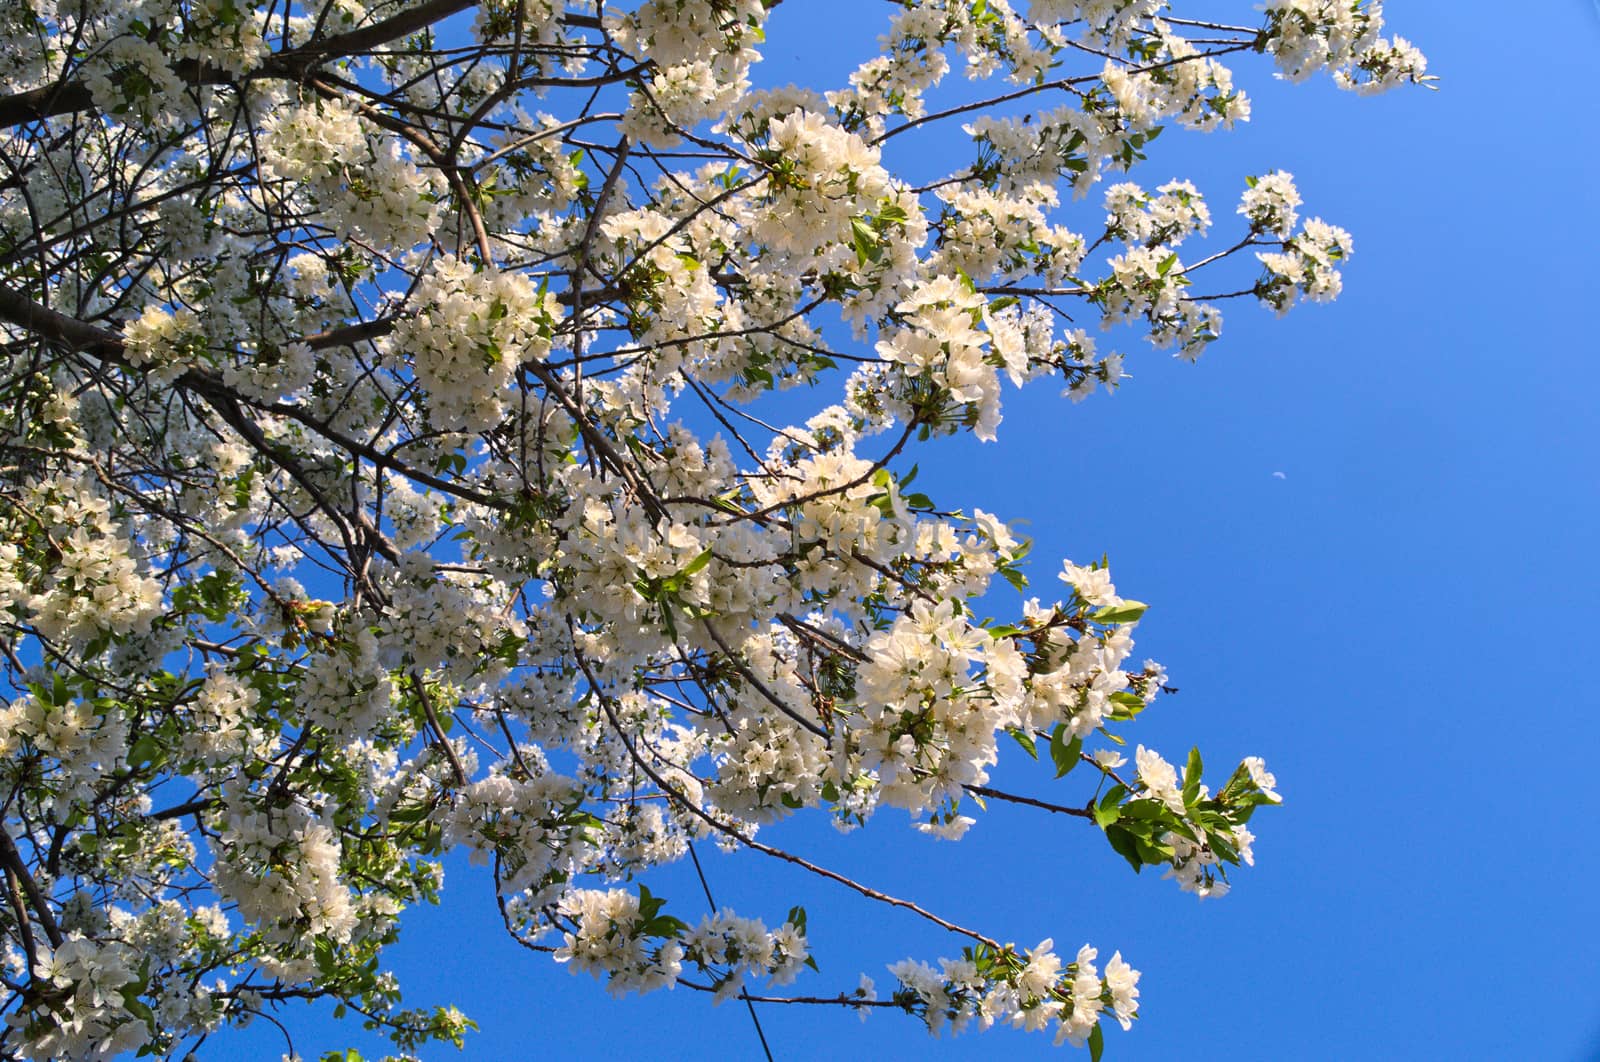 Cherry tree full of blooming white flowers